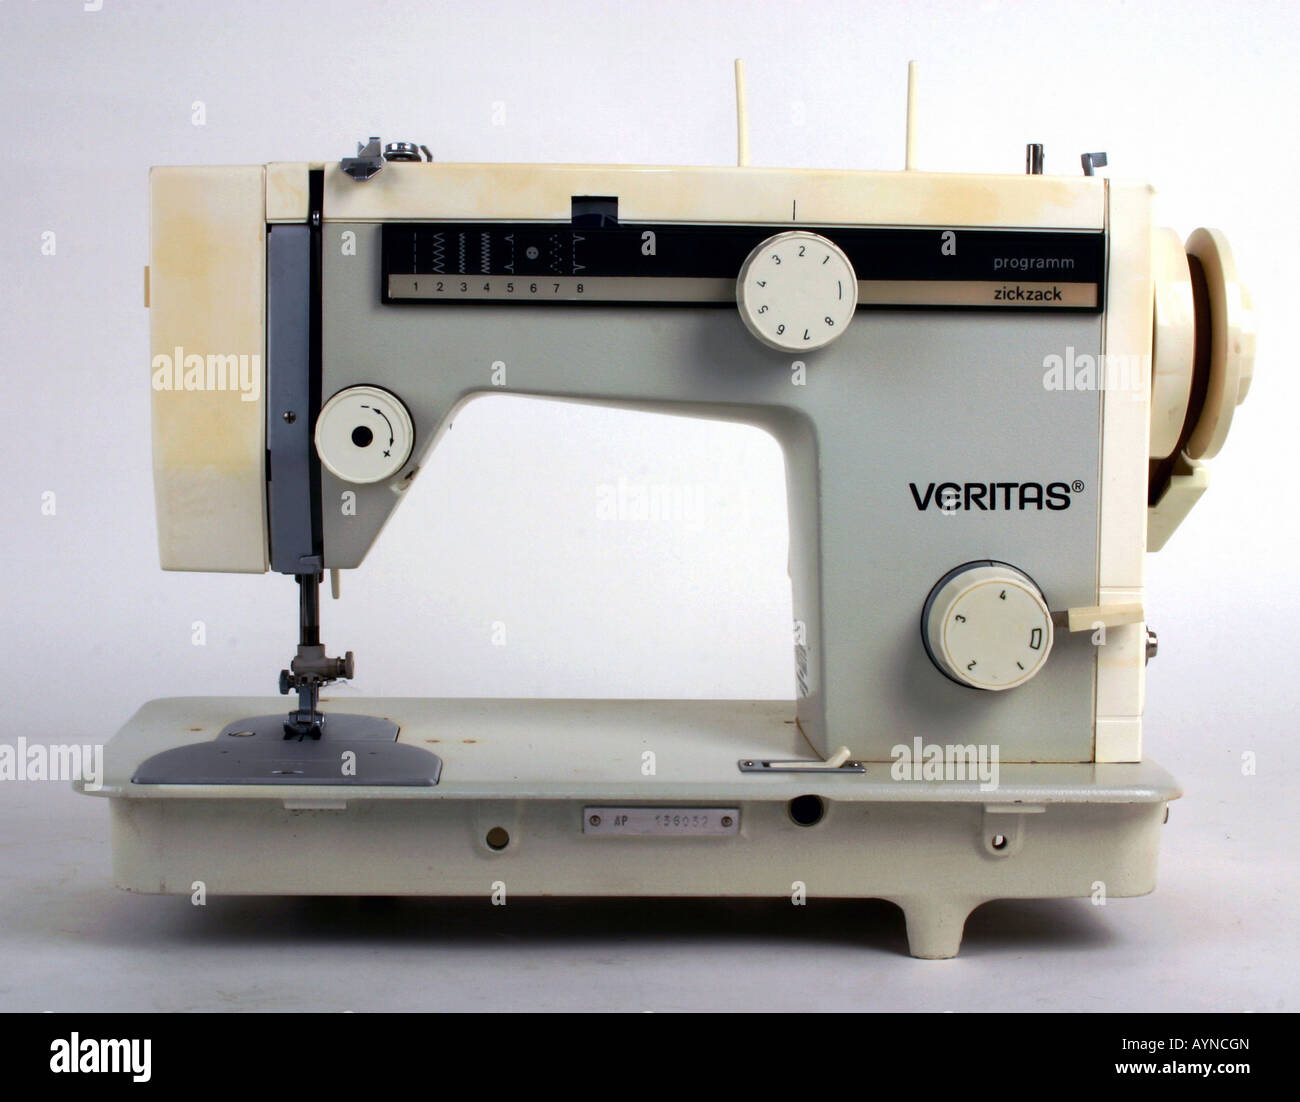 Veritas -Fotos und -Bildmaterial in hoher Auflösung – Alamy